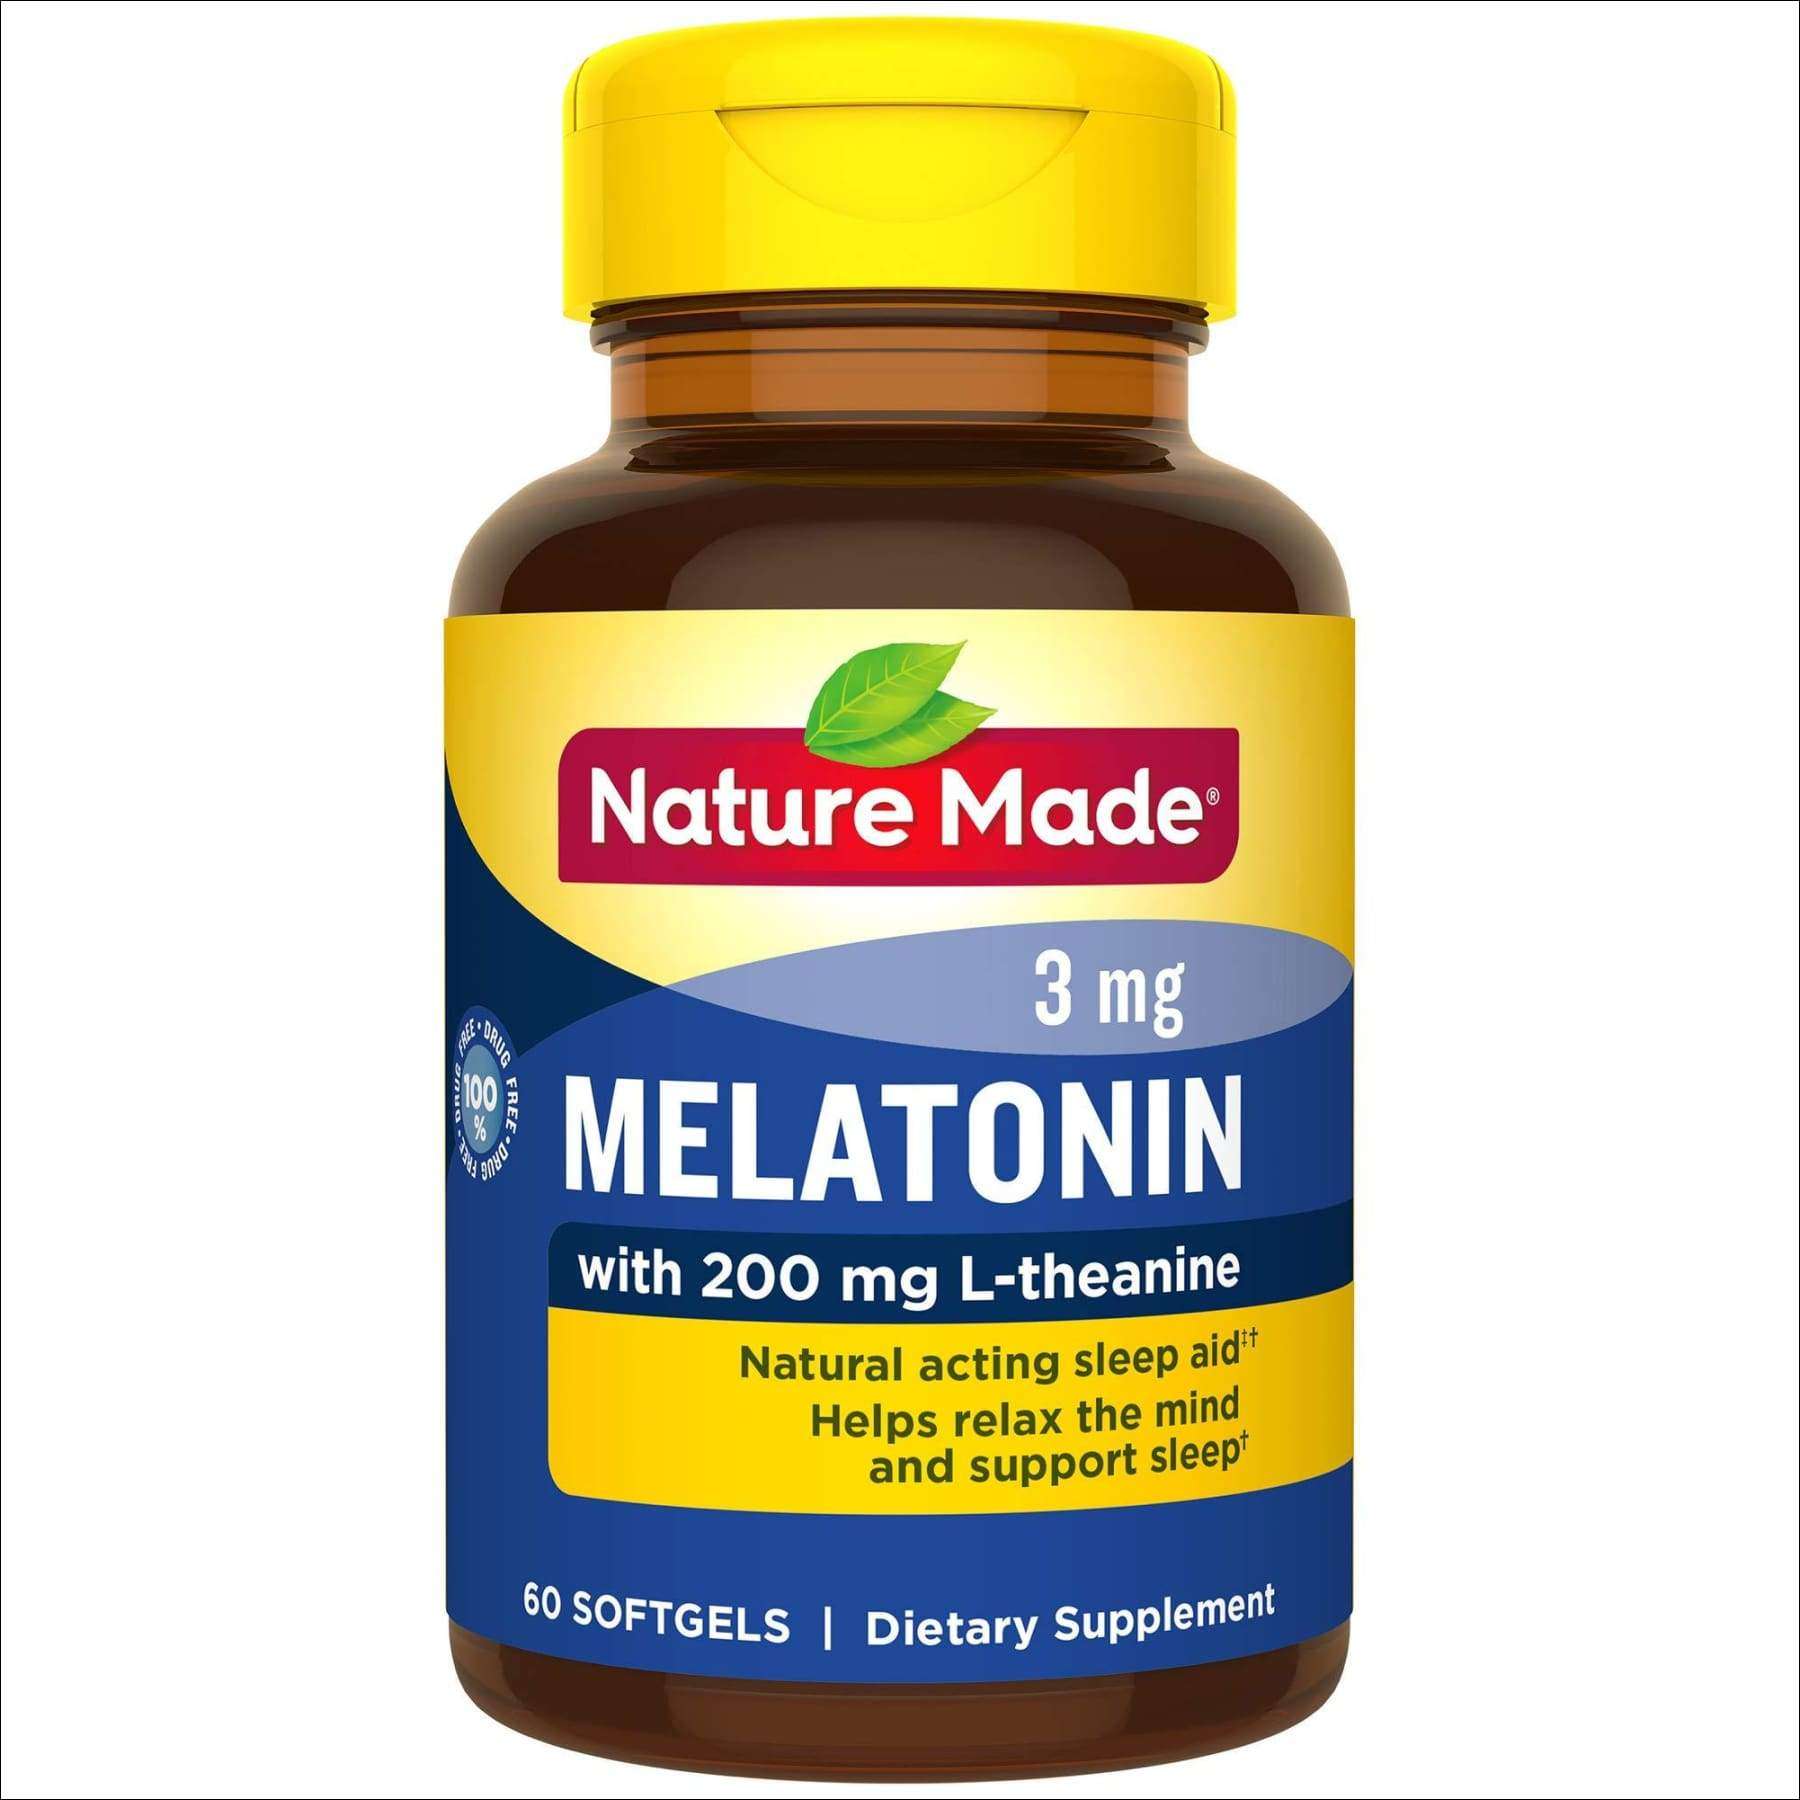 Nature Made Melatonin 3 mg with 200 mg L